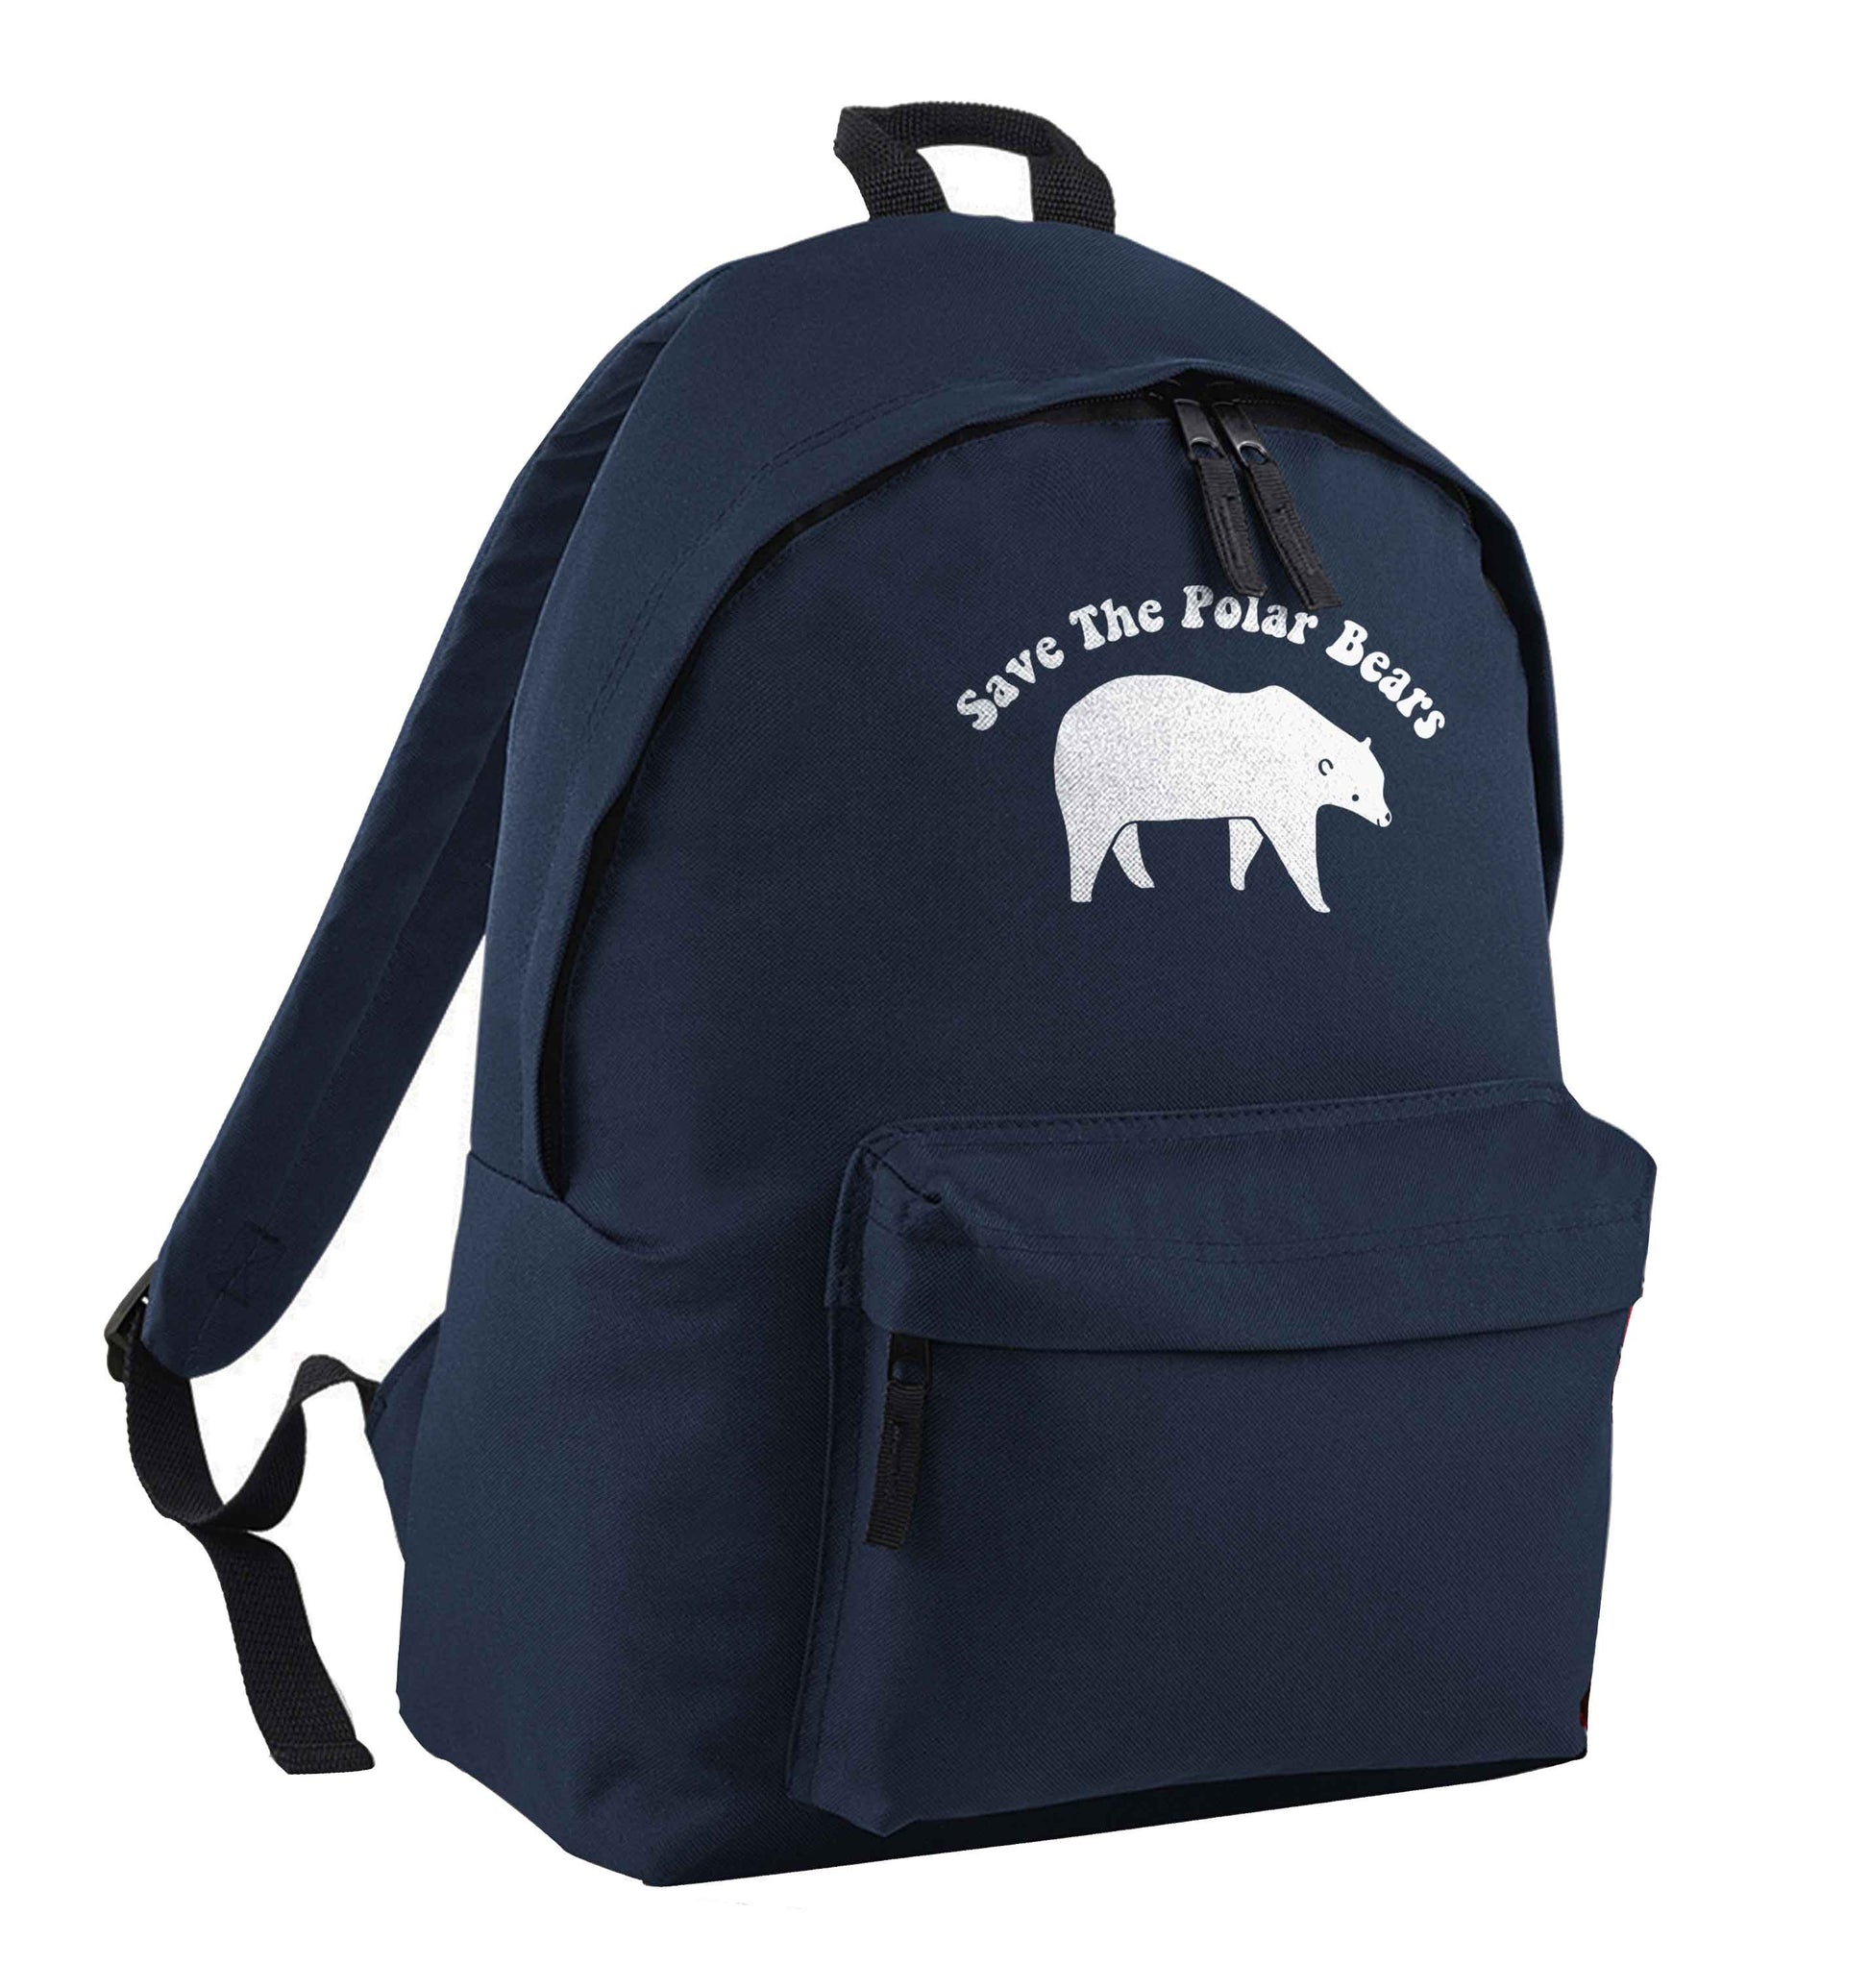 Save The Polar Bears navy children's backpack